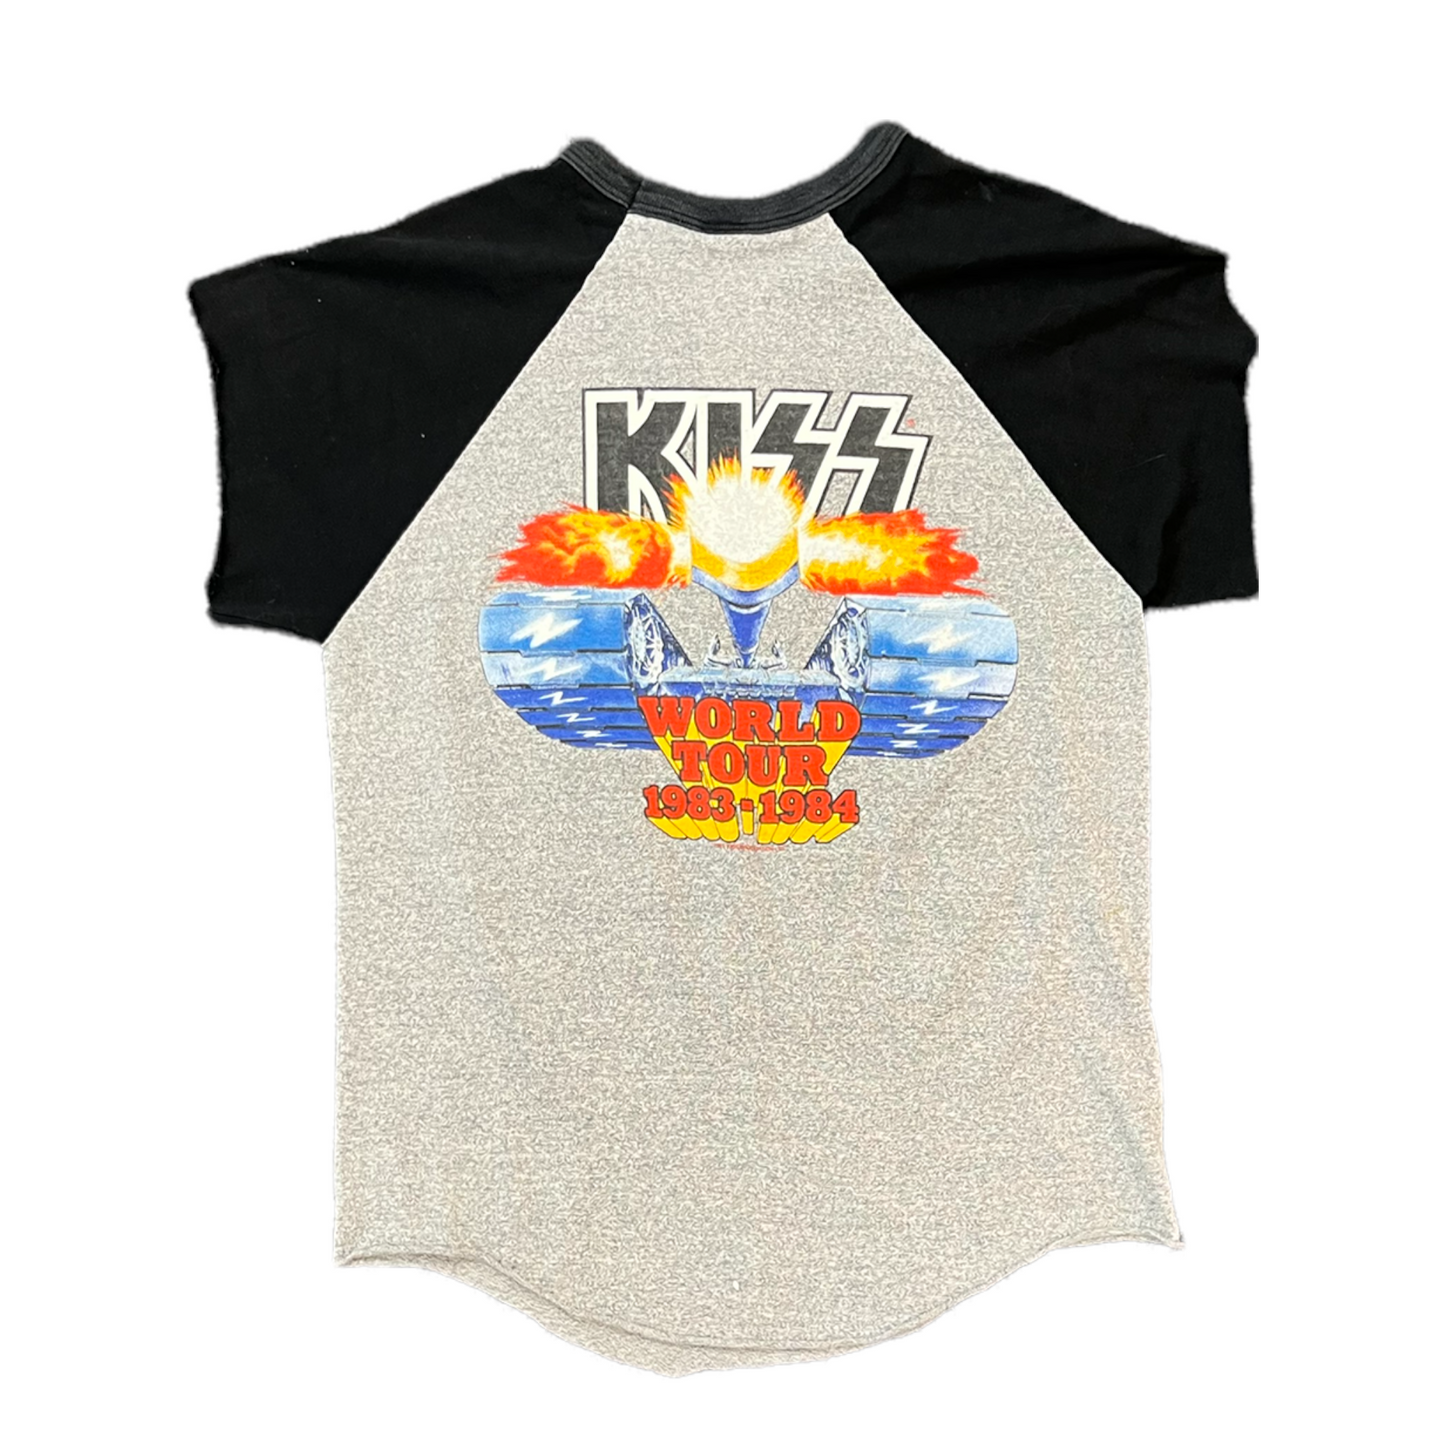 Vintage 1983-84 Kiss Tour T-Shirt